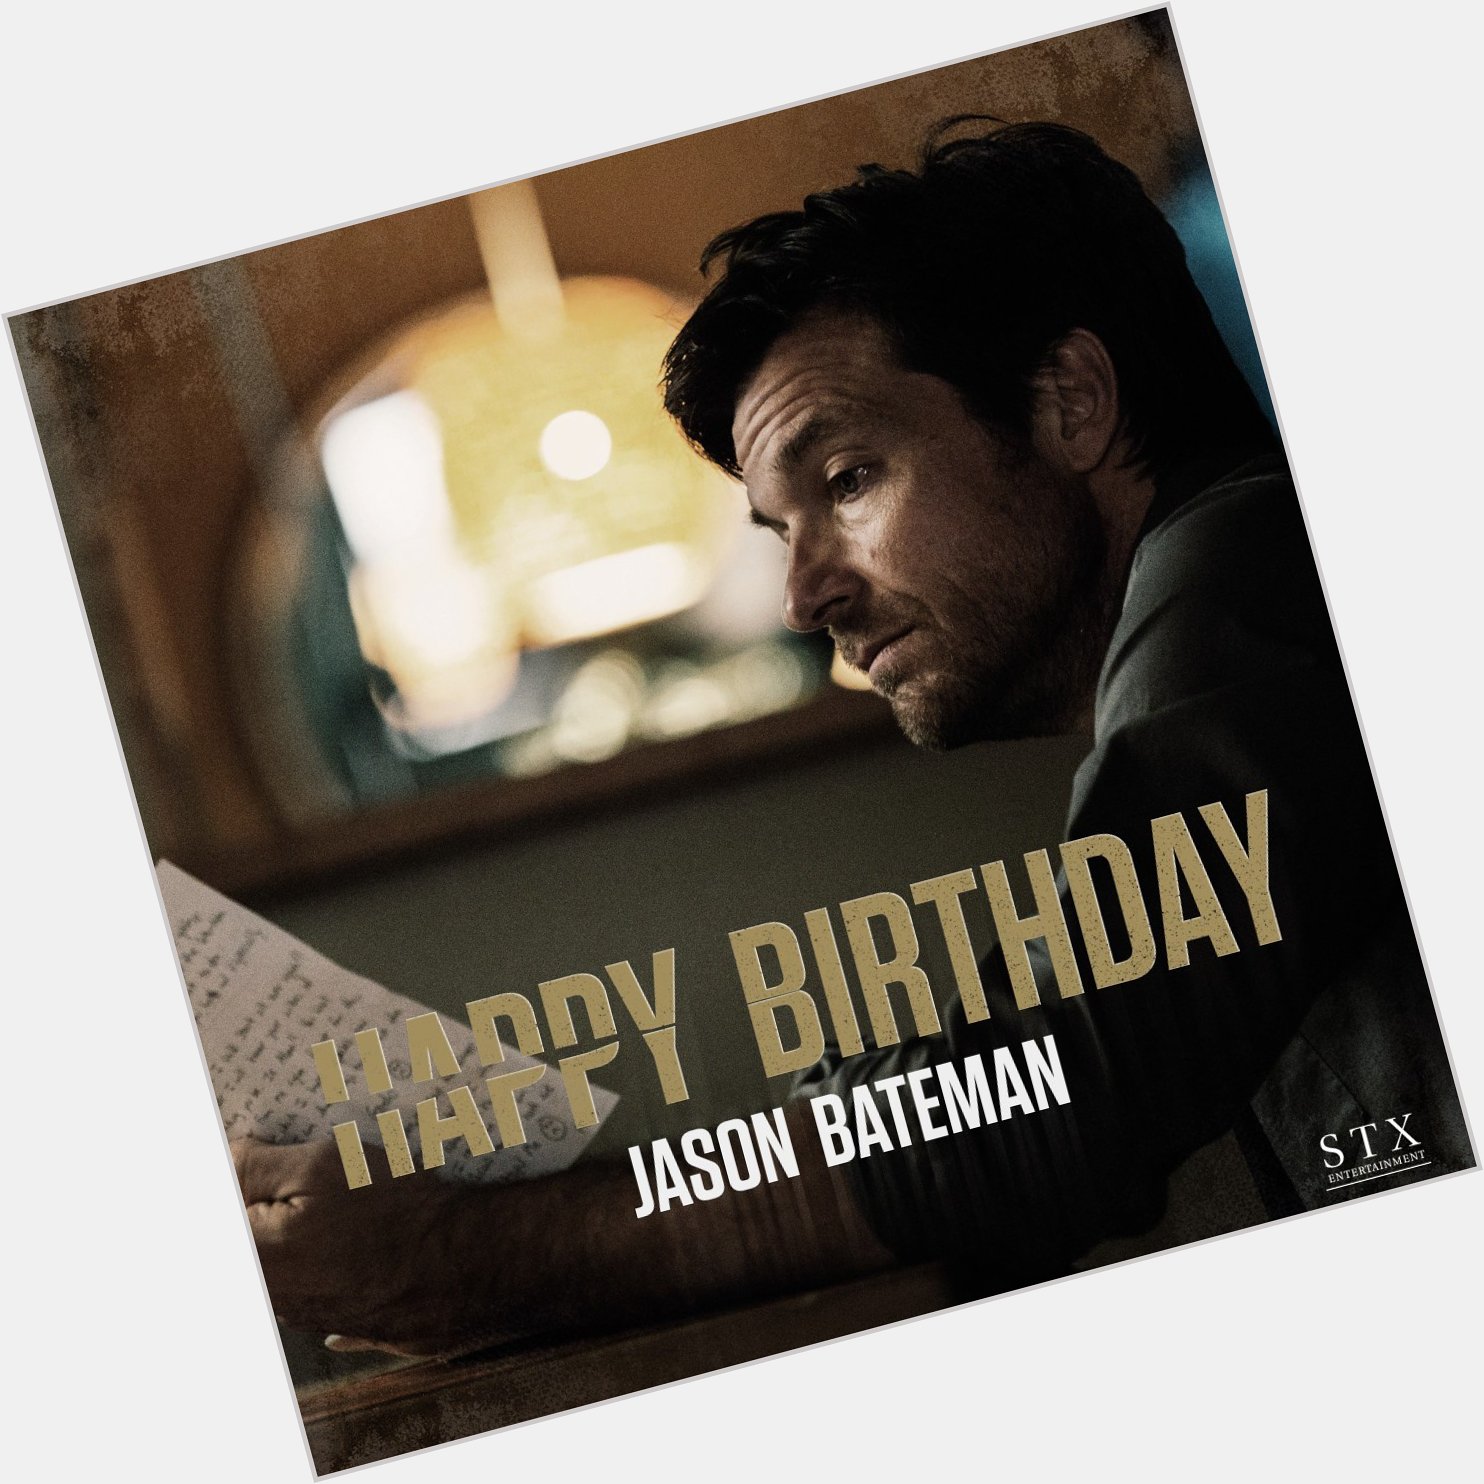 Happy birthday to the talented Jason Bateman! 